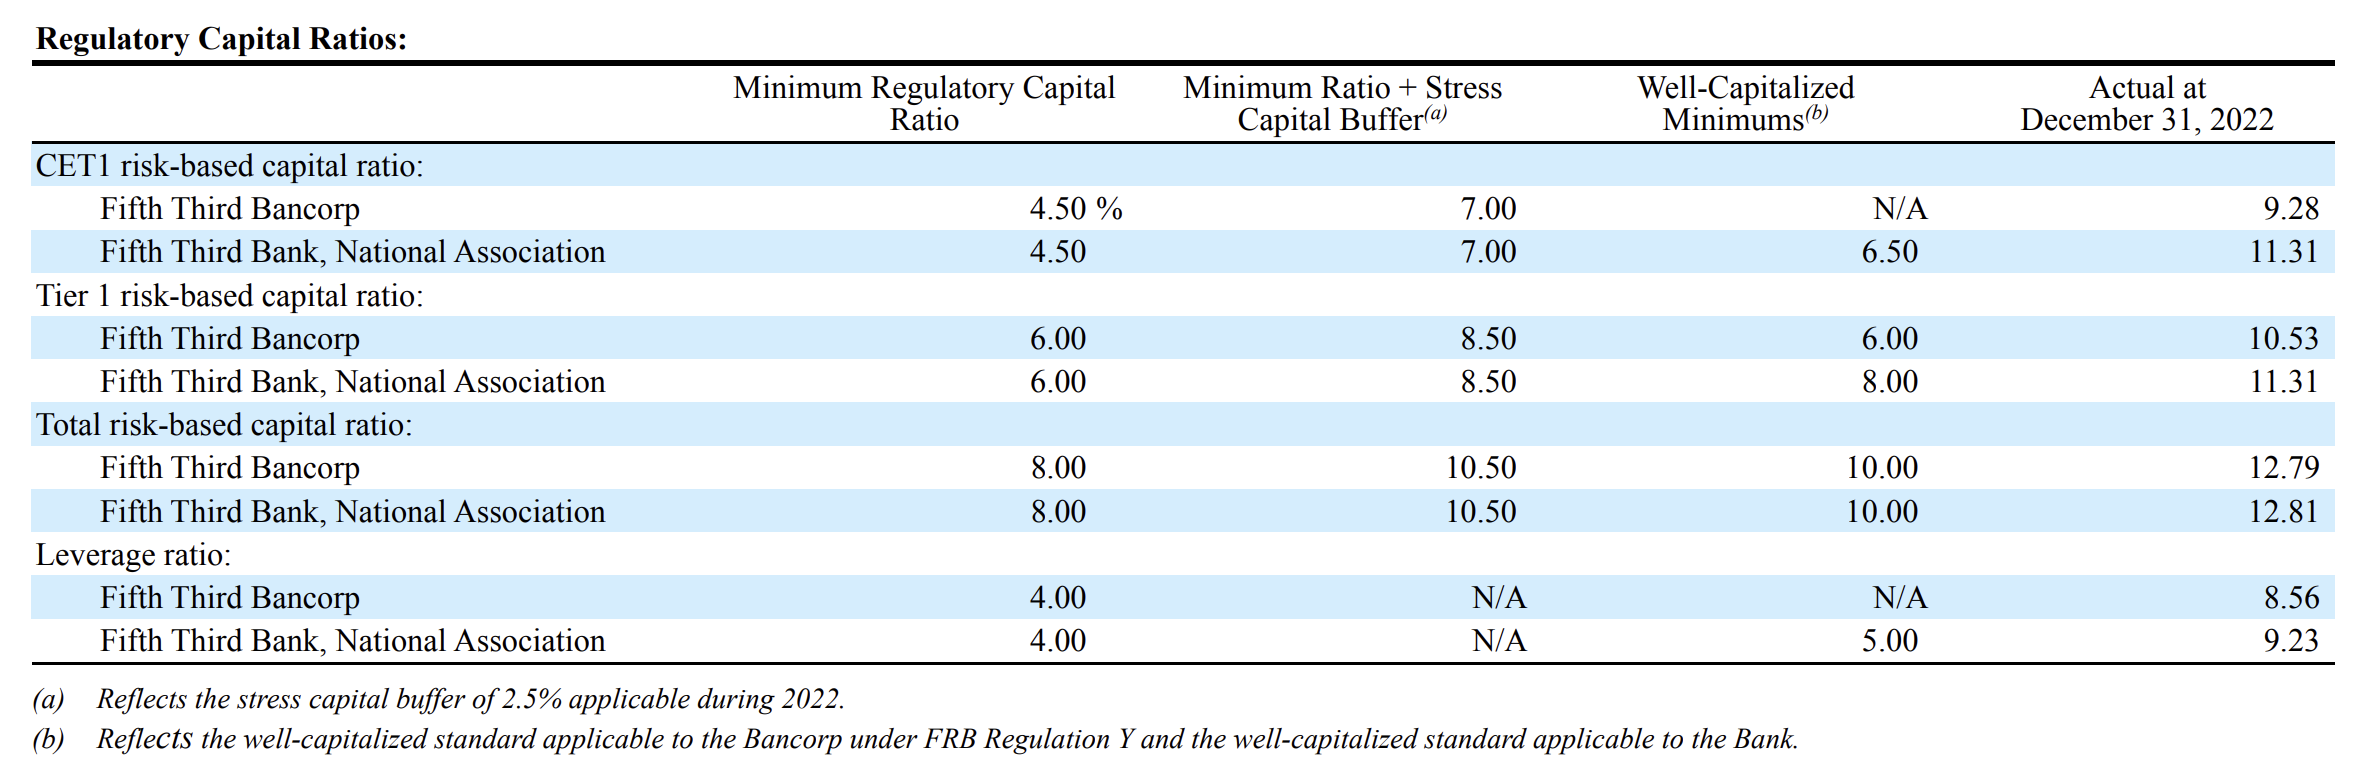 FITB’s regulatory capital ratios